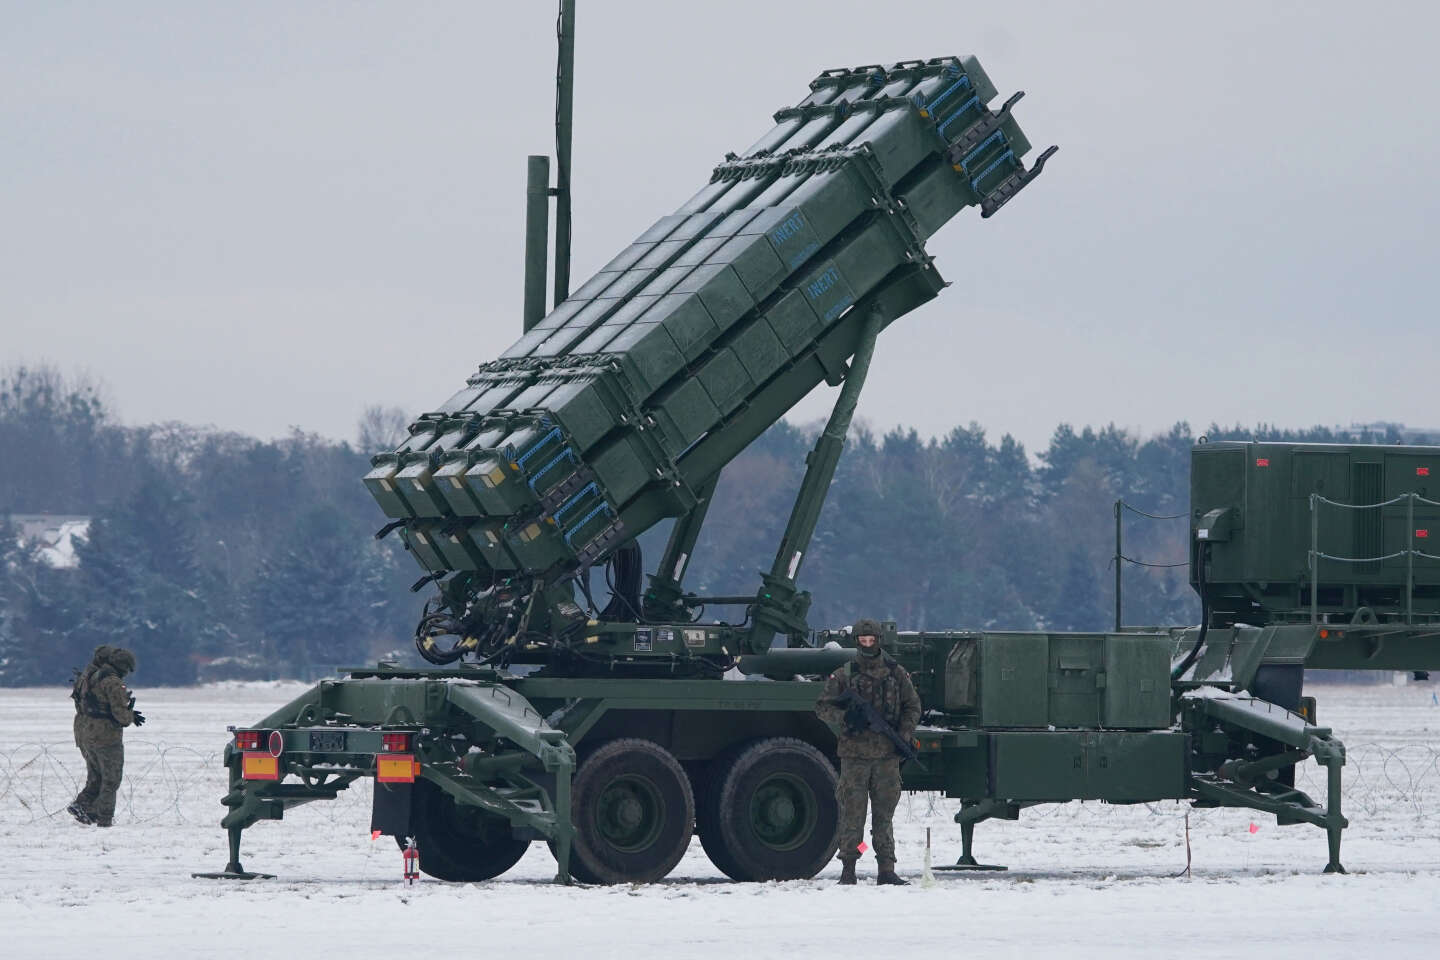 Nikkei Asia: Η αποστολή αντιαεροπορικού πυραυλικού συστήματος Patriot στην Ουκρανία έχει αποδυναμώσει σοβαρά την άμυνα της Ιαπωνίας